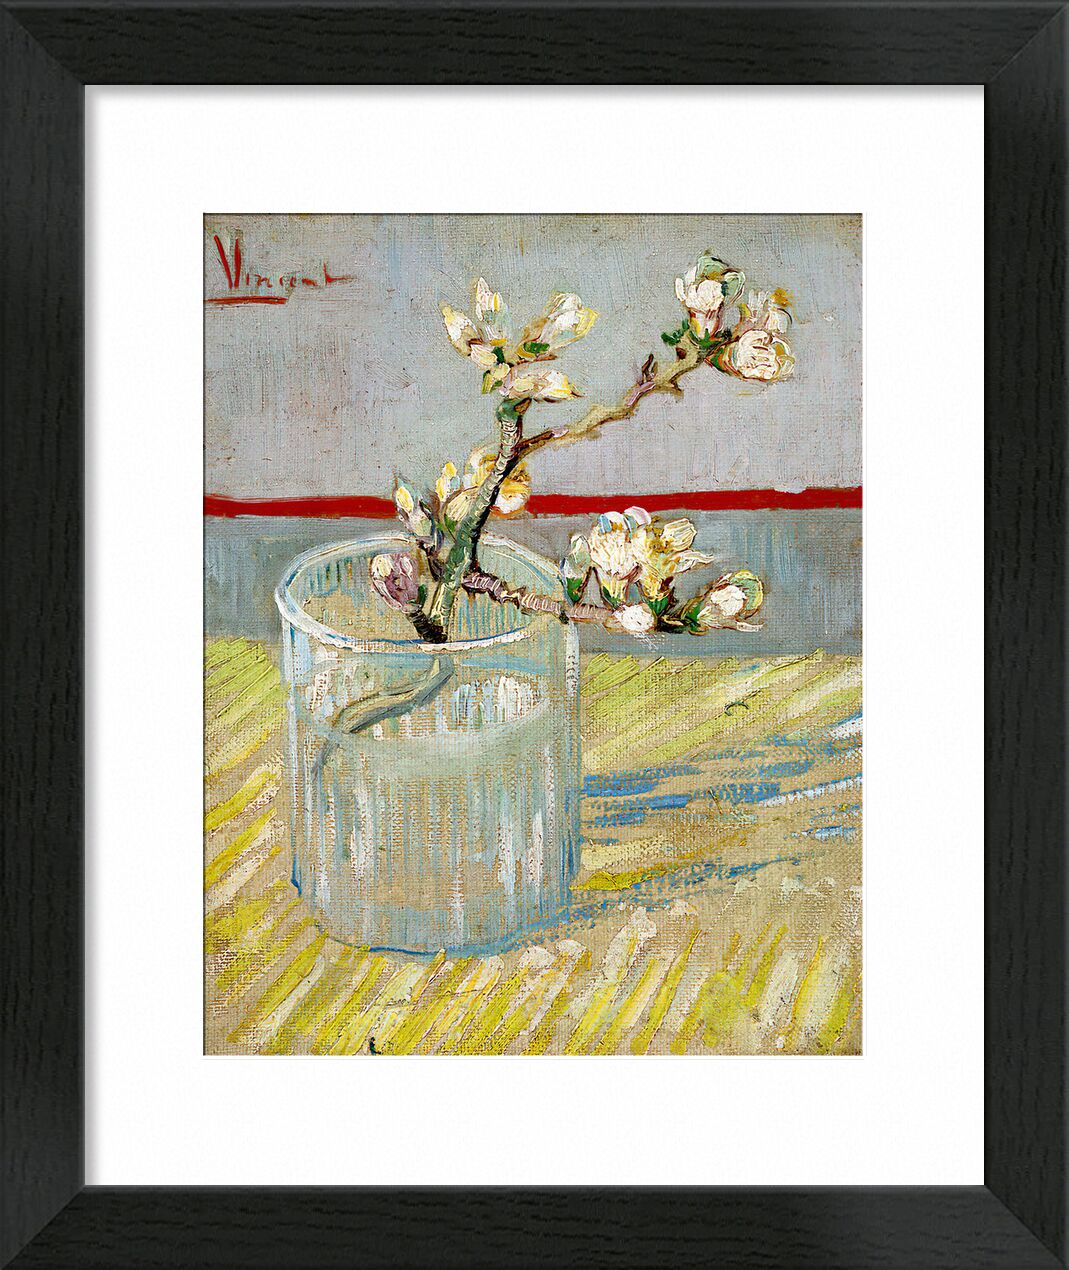 Blossoming Almond Branch in a Glass - Van Gogh desde Bellas artes, Prodi Art, almendra, almendra, rama, pintura, Van gogh